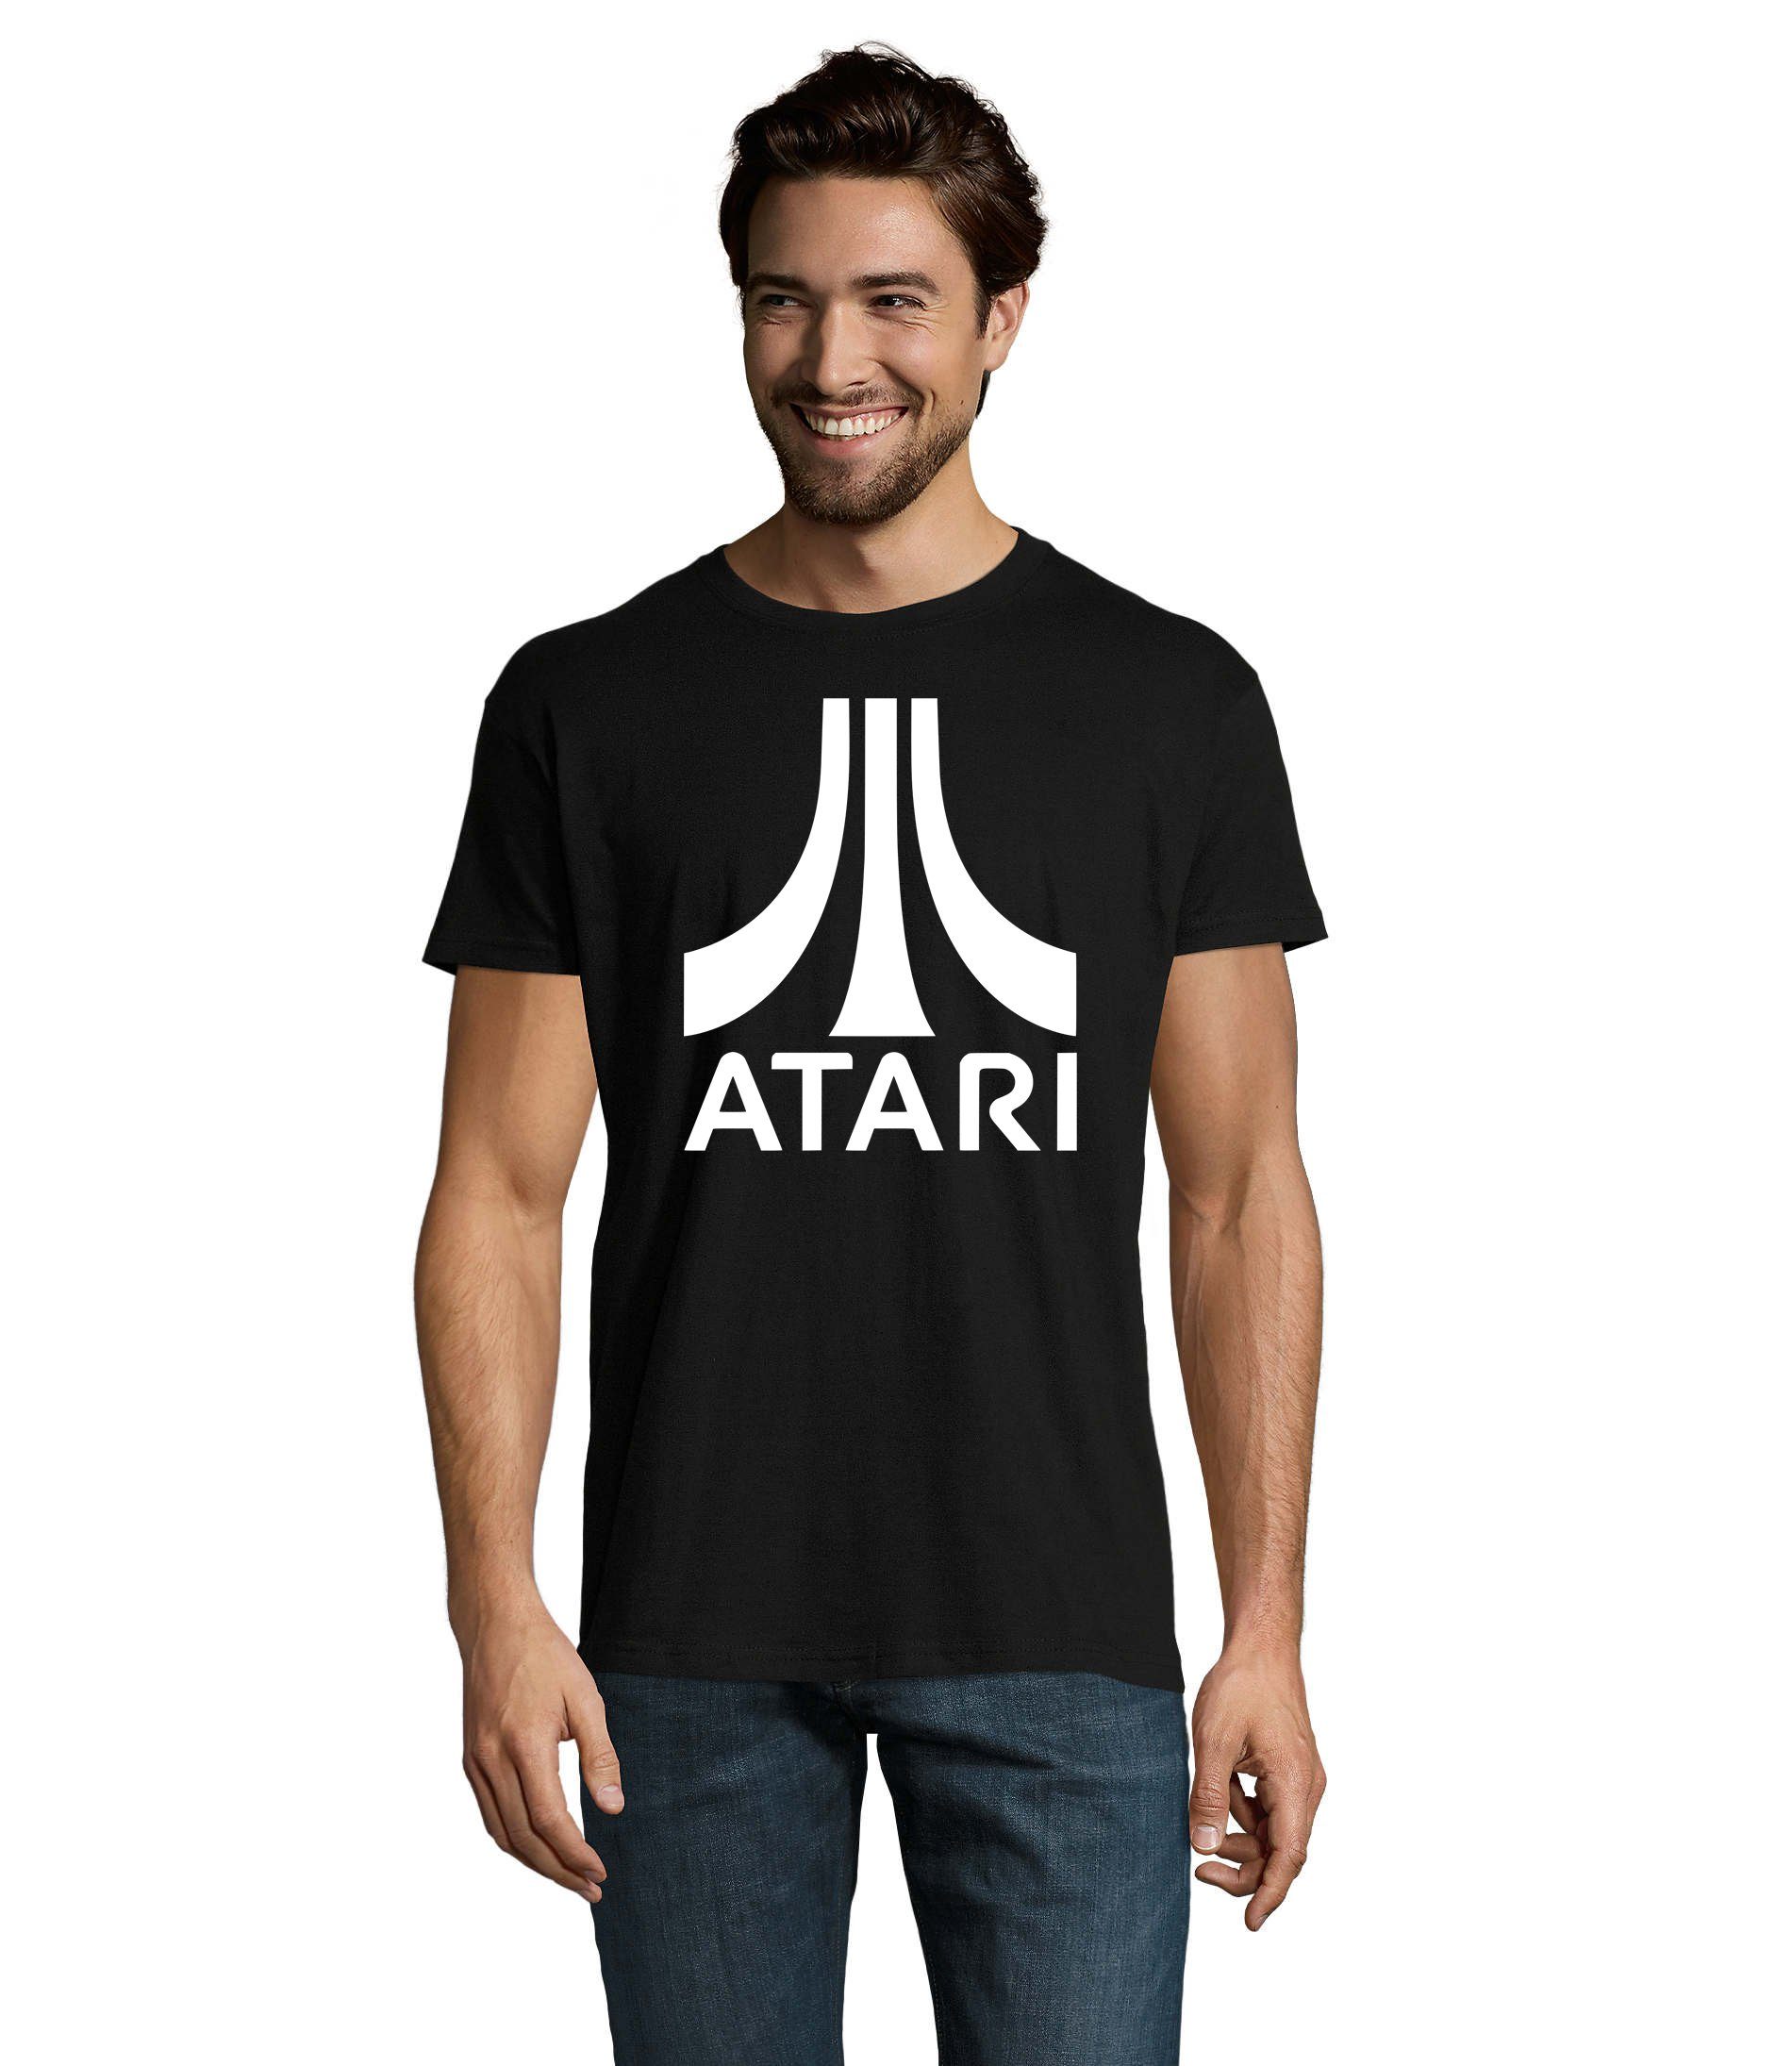 Blondie & Brownie T-Shirt Herren Atari Gaming Gamer Spiele Konsole Super Retro